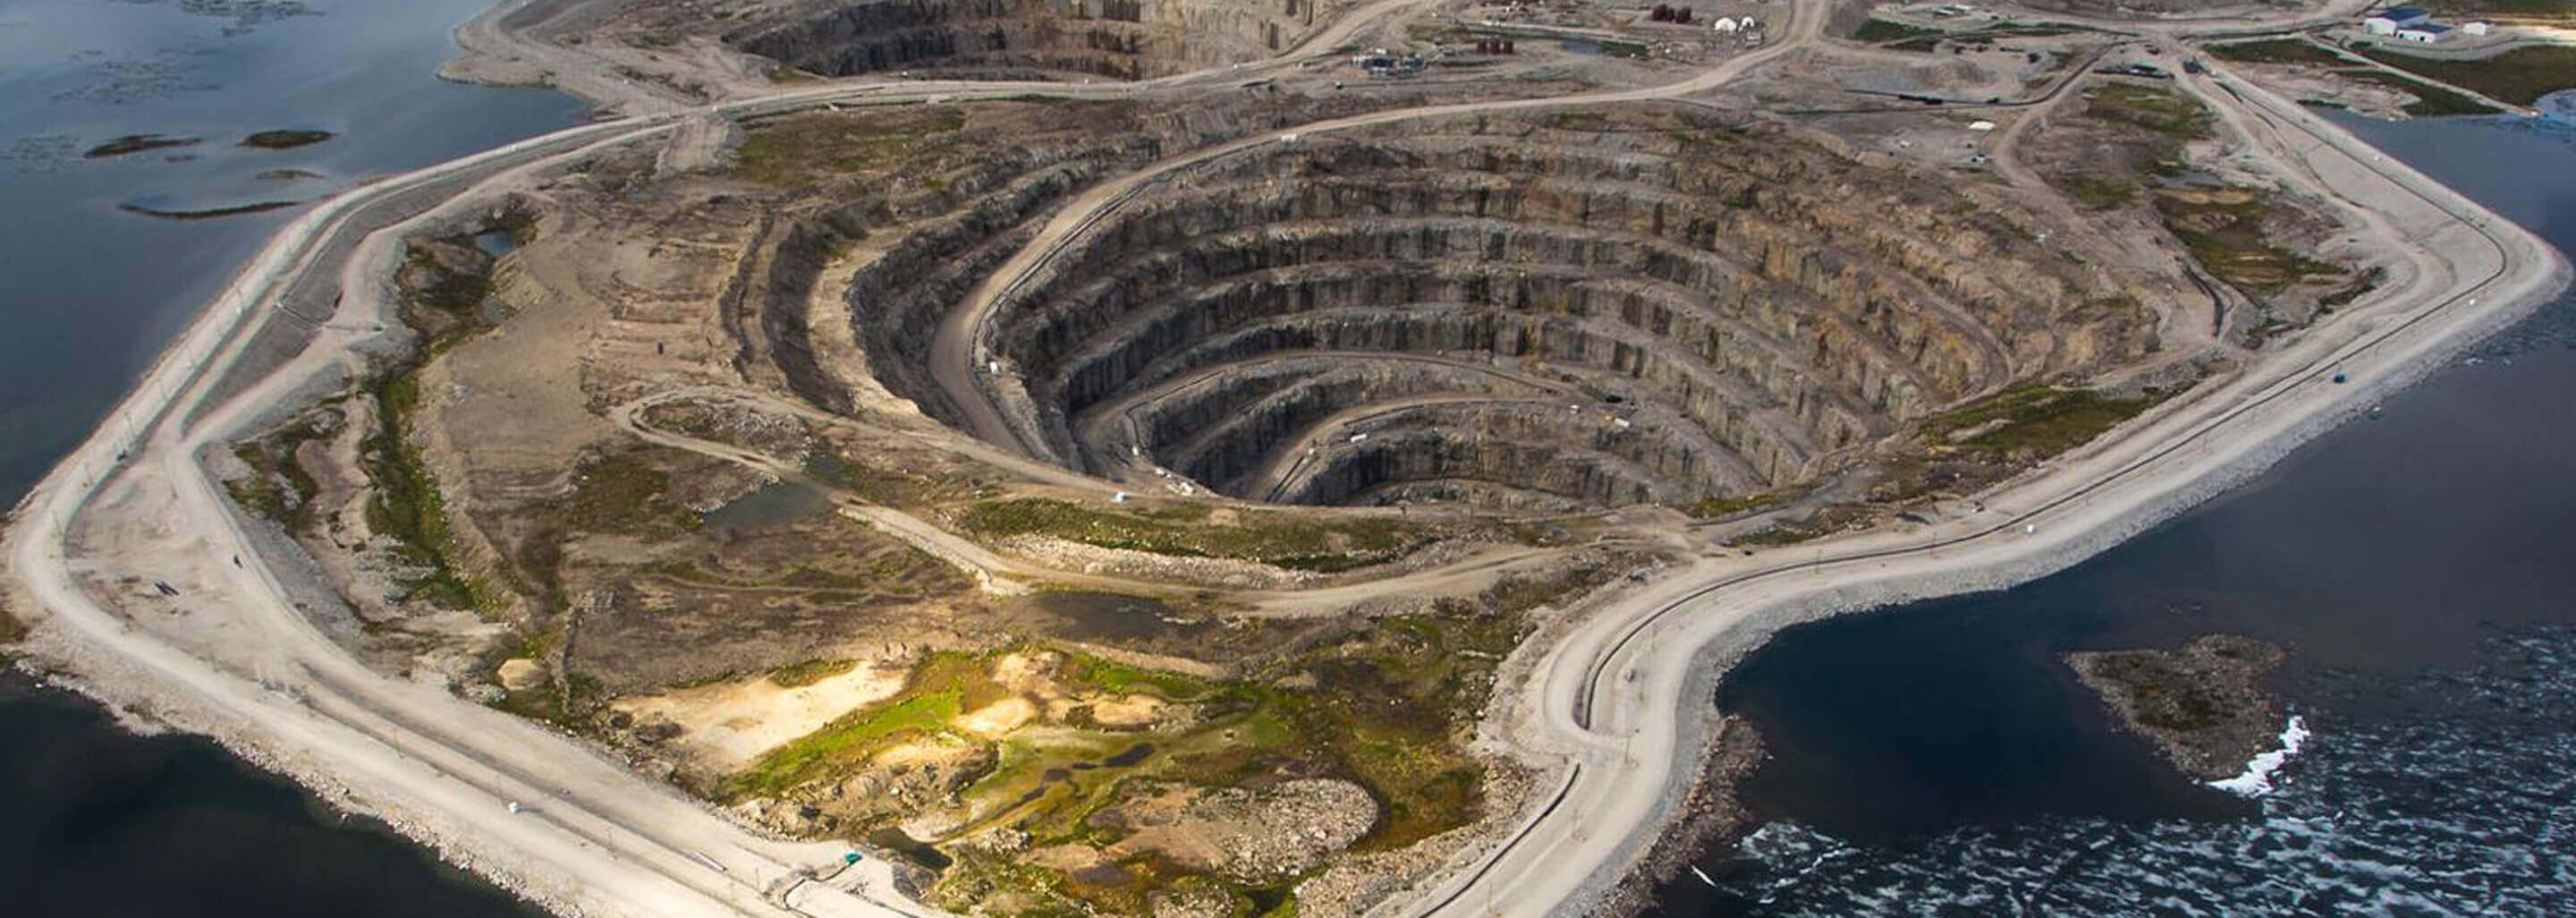 15-diamond-mining-facts